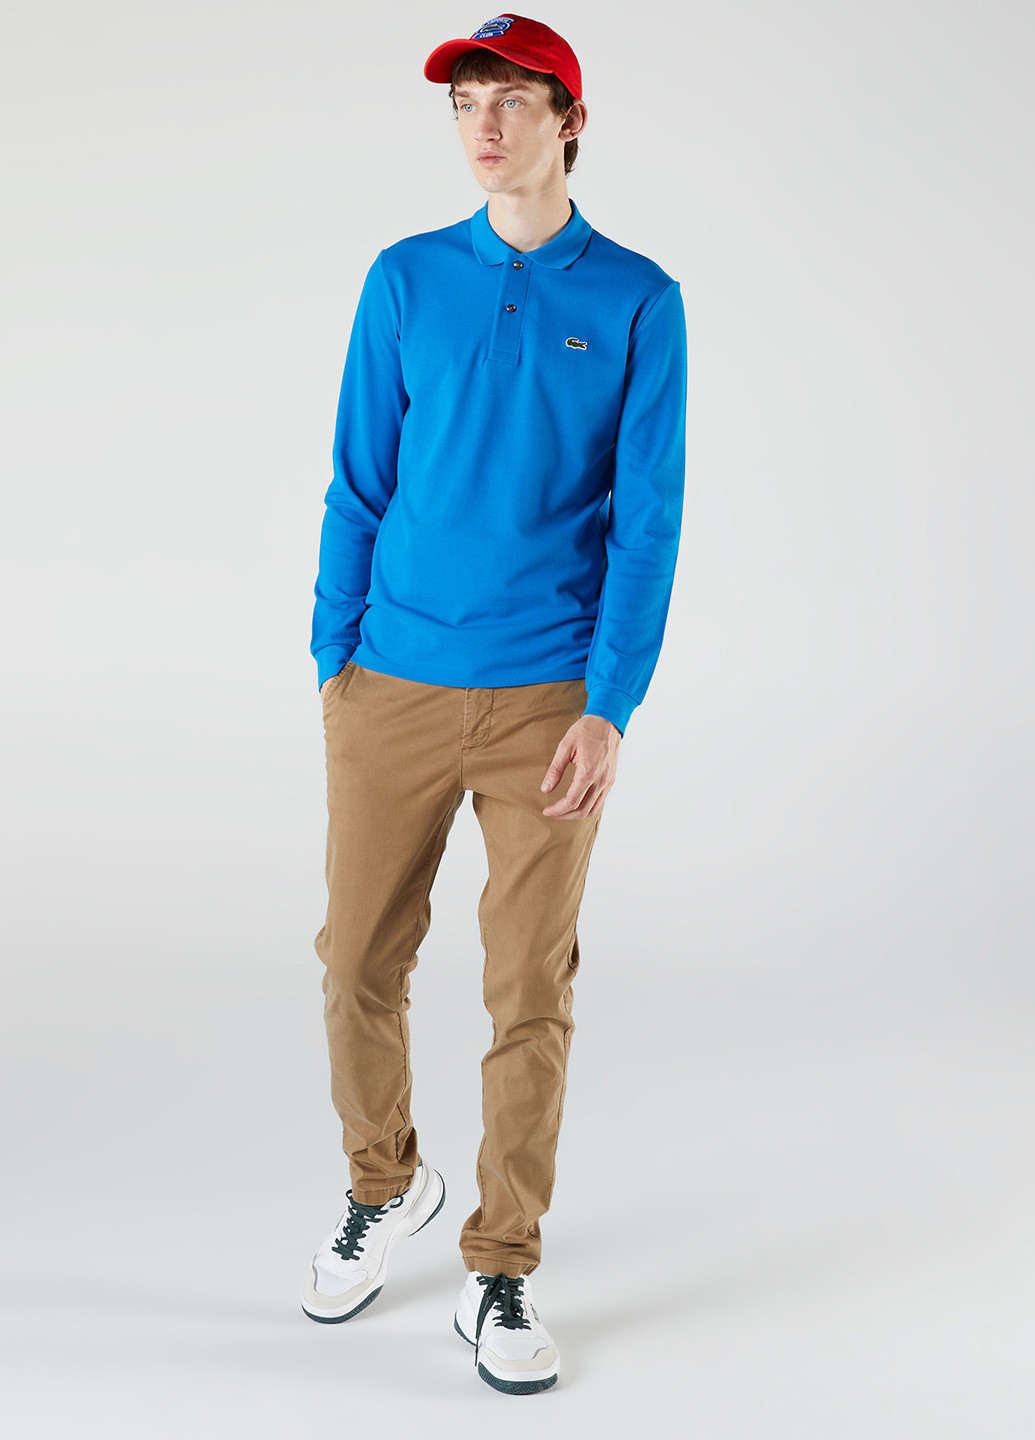 Светло-синяя футболка-поло для мужчин Lacoste с логотипом